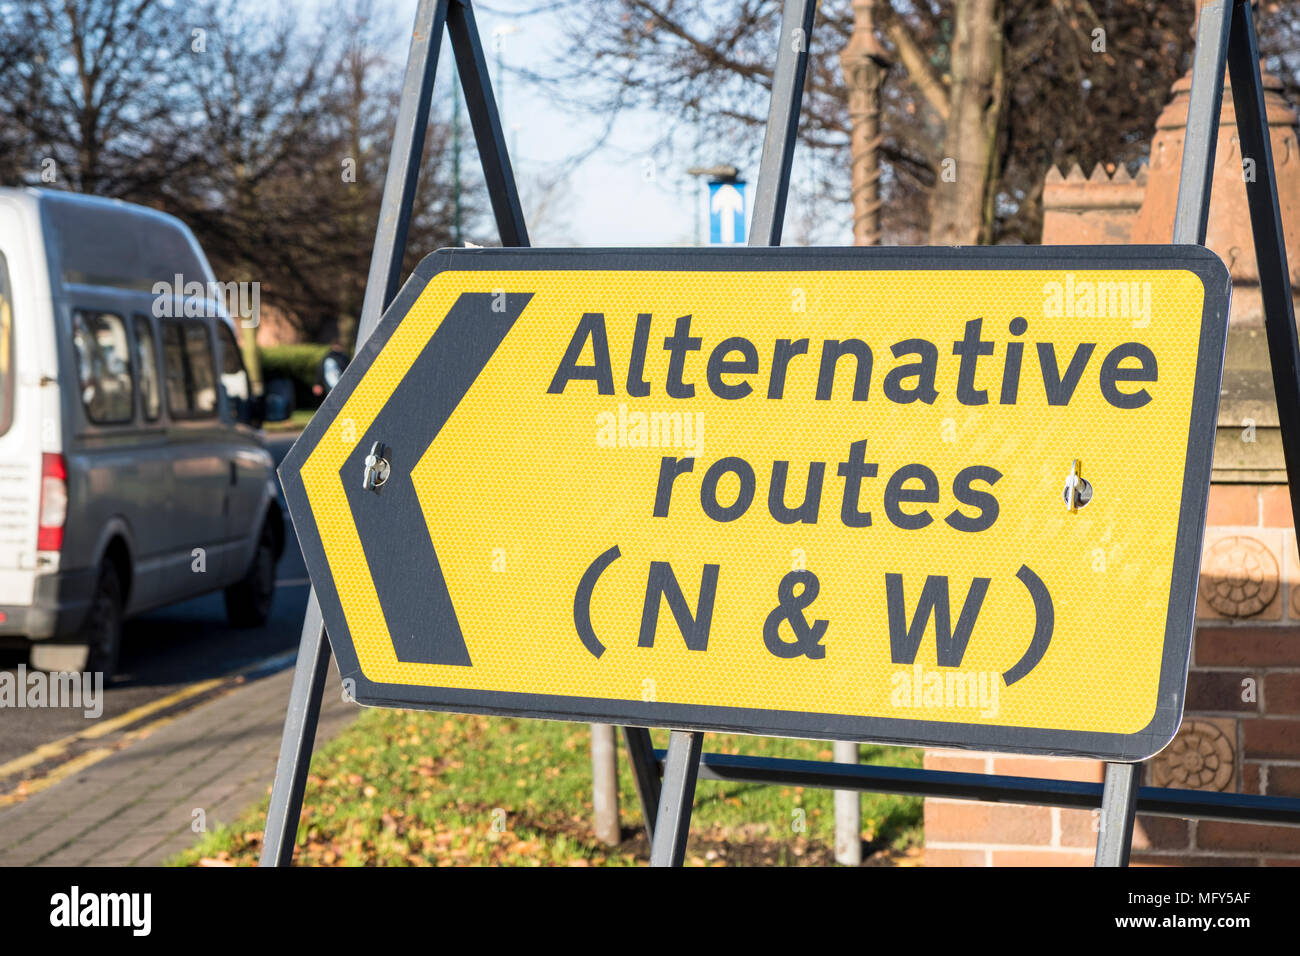 Alternative route. Temporary road sign redirecting traffic along alternative routes, Nottingham, England, UK Stock Photo